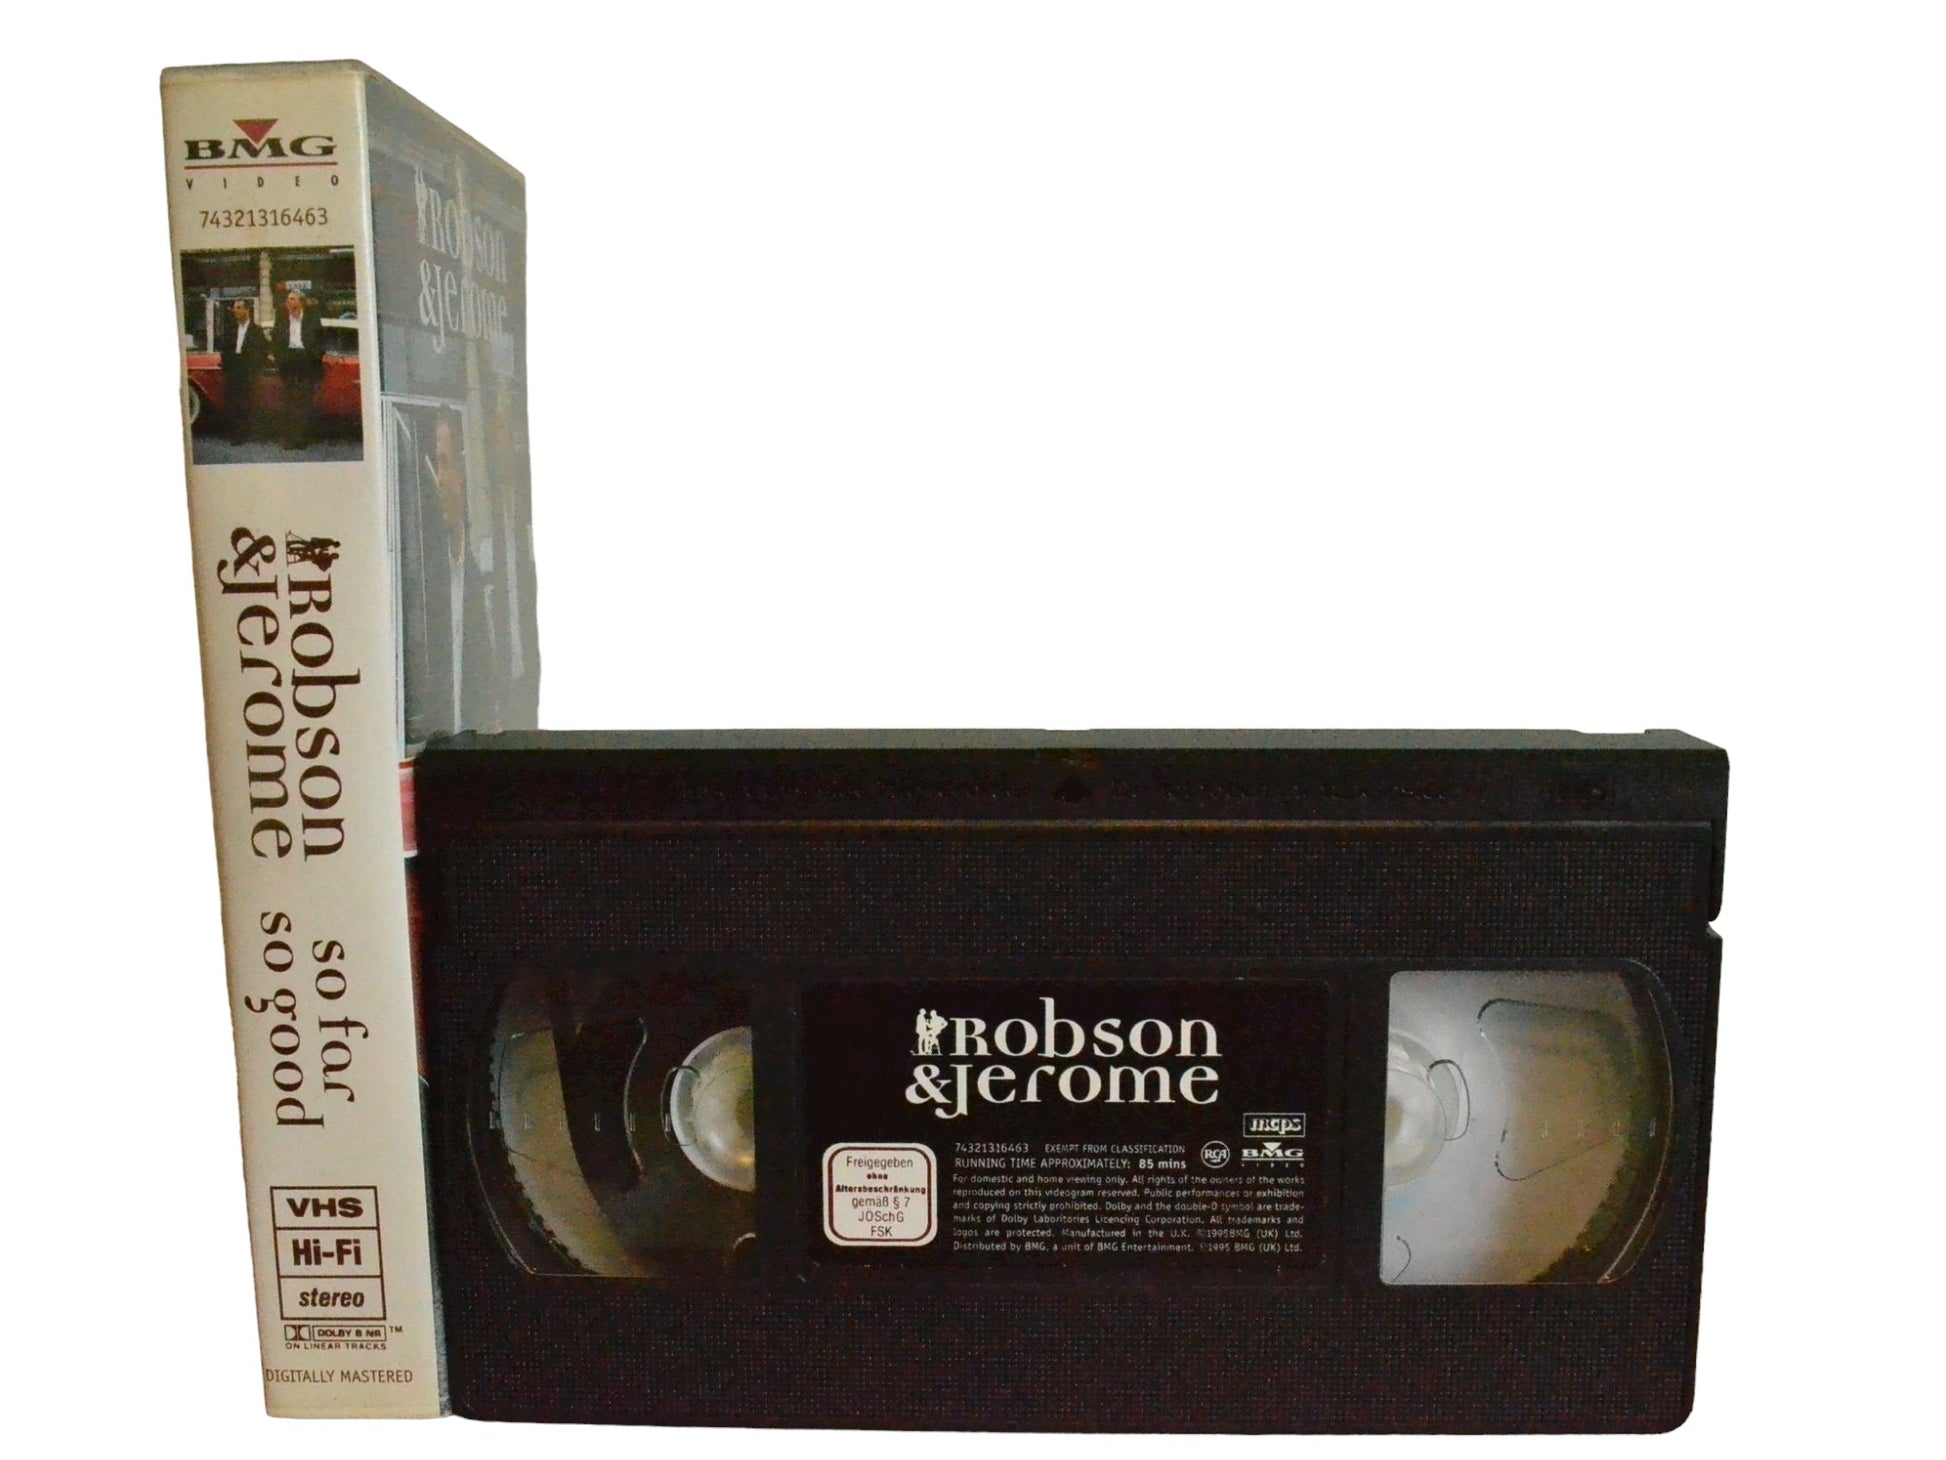 Robsone & Jerome - So Far So Good - Gary Barlow - BMG Video - Music - PAL - VHS-